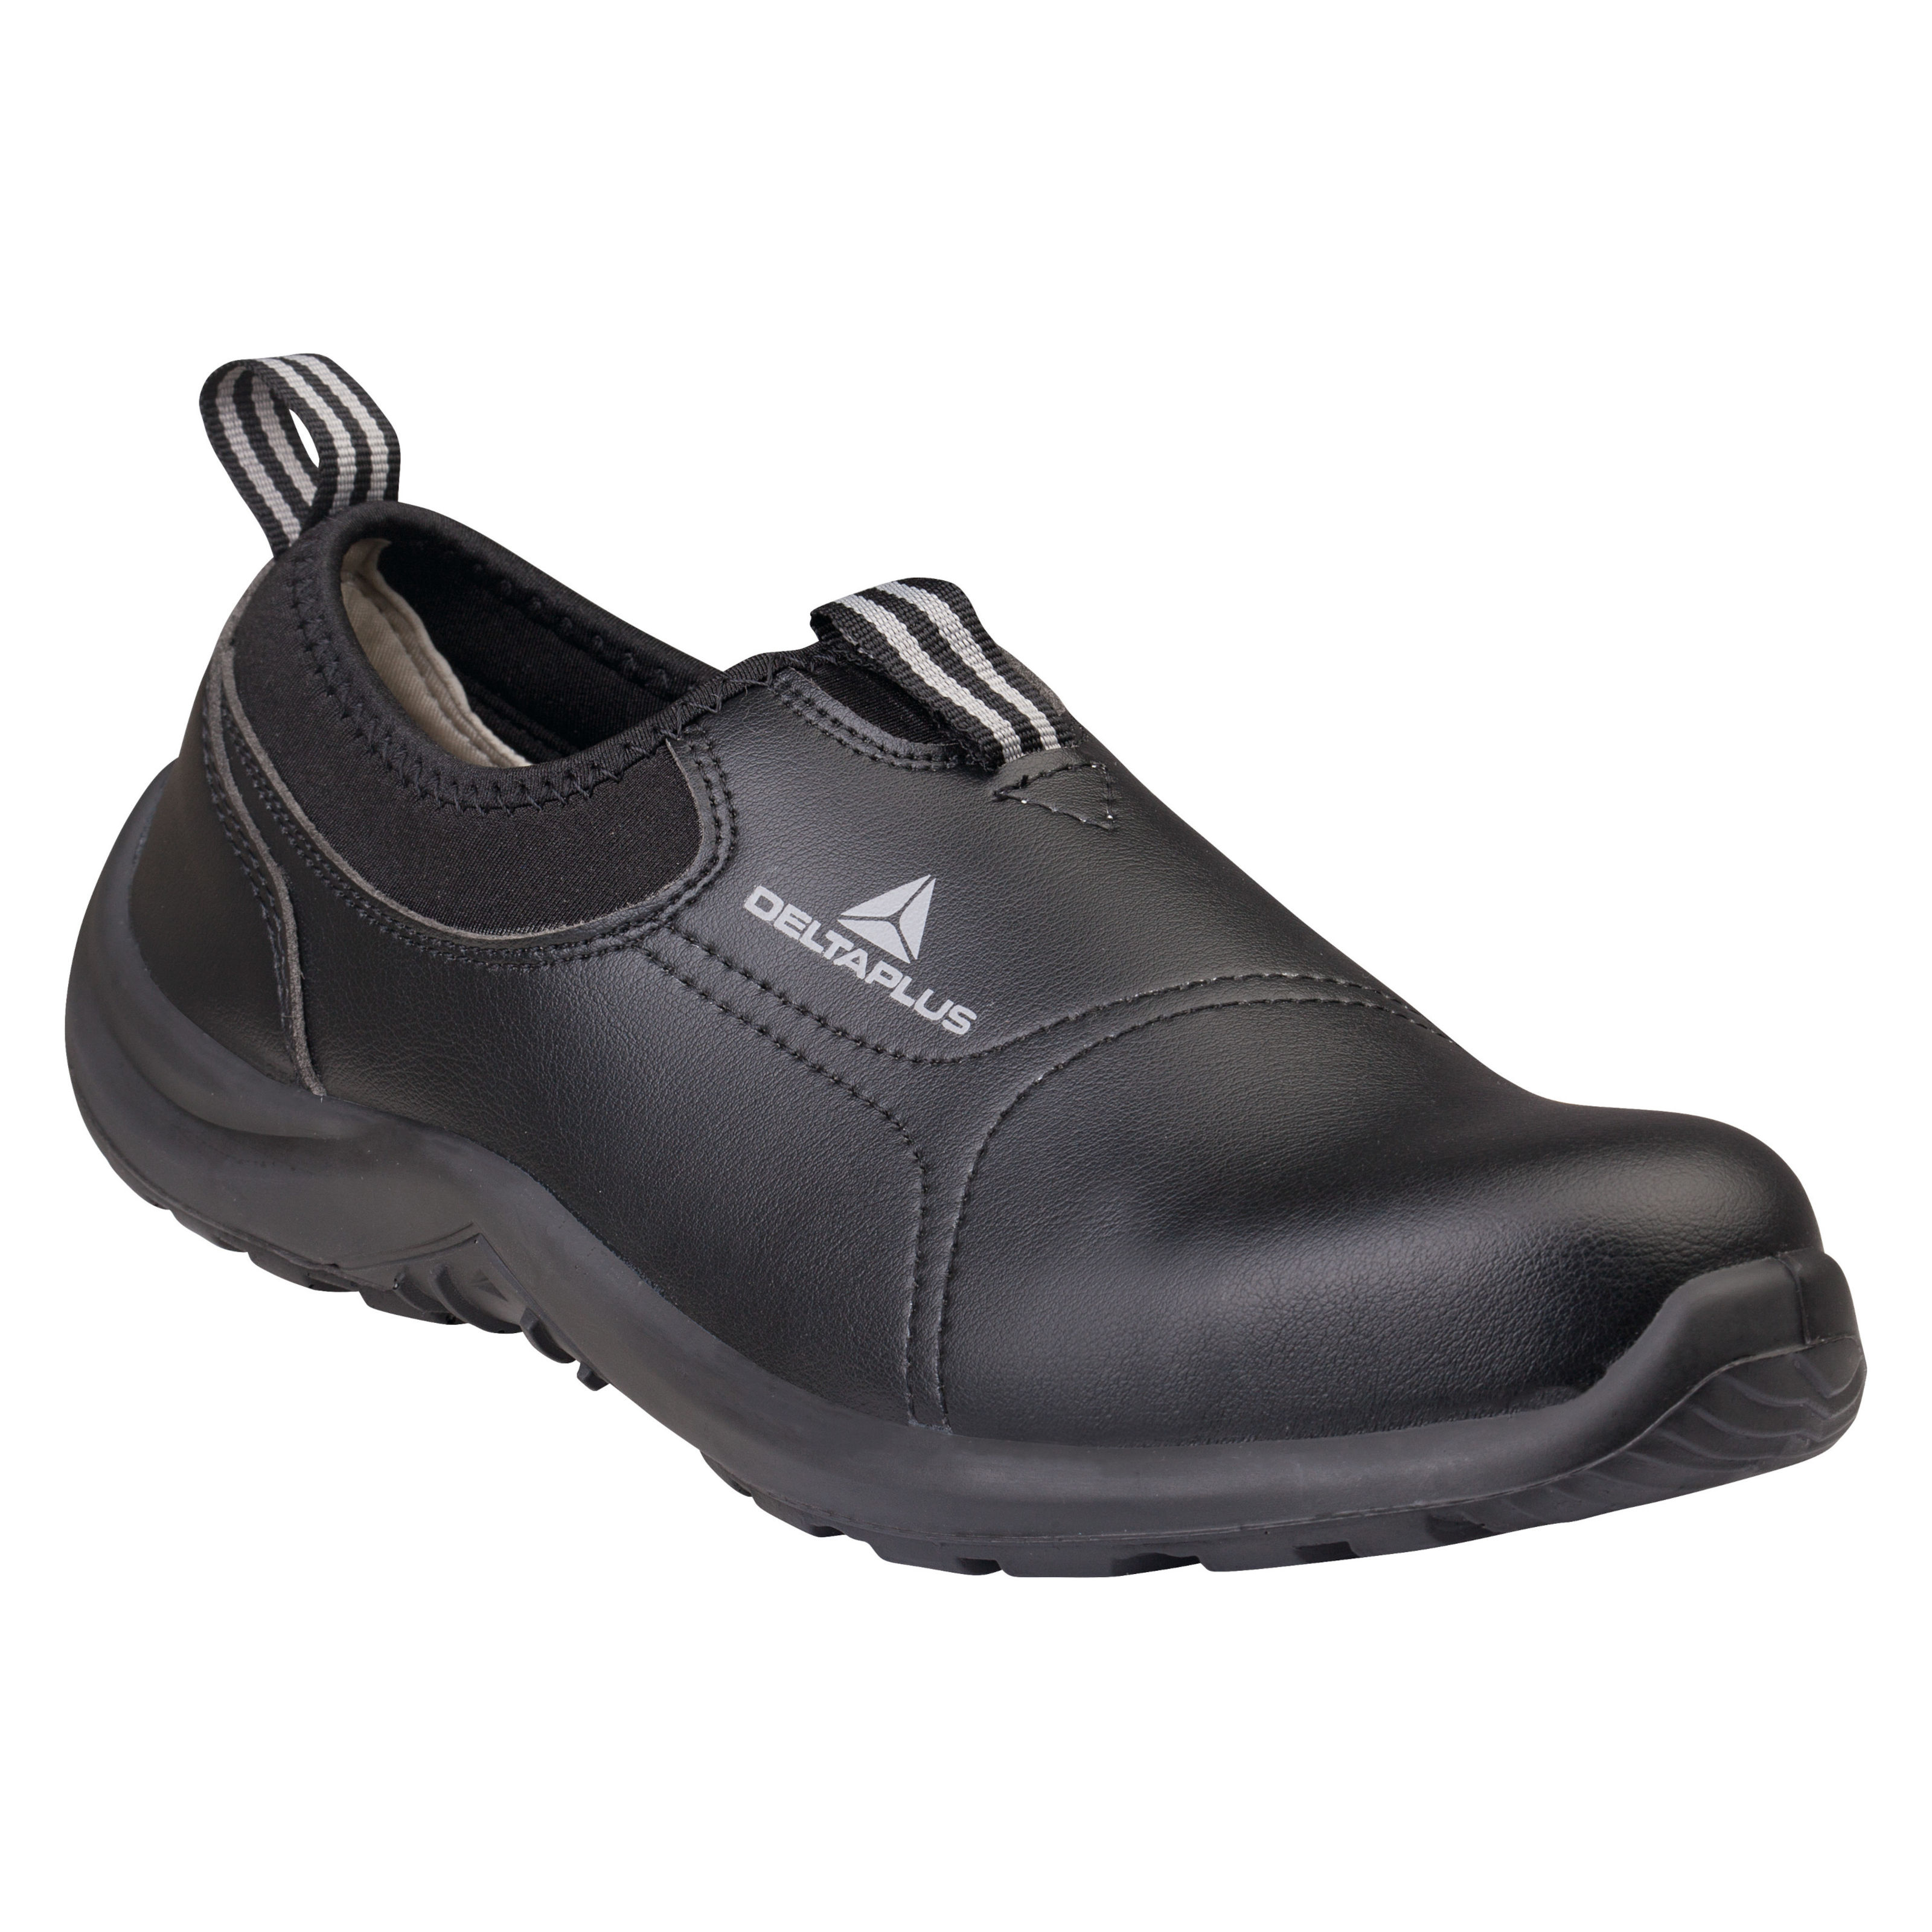 Men stuff Delta Plus Safety shoe EU 41-14512690|Mzad Qatar